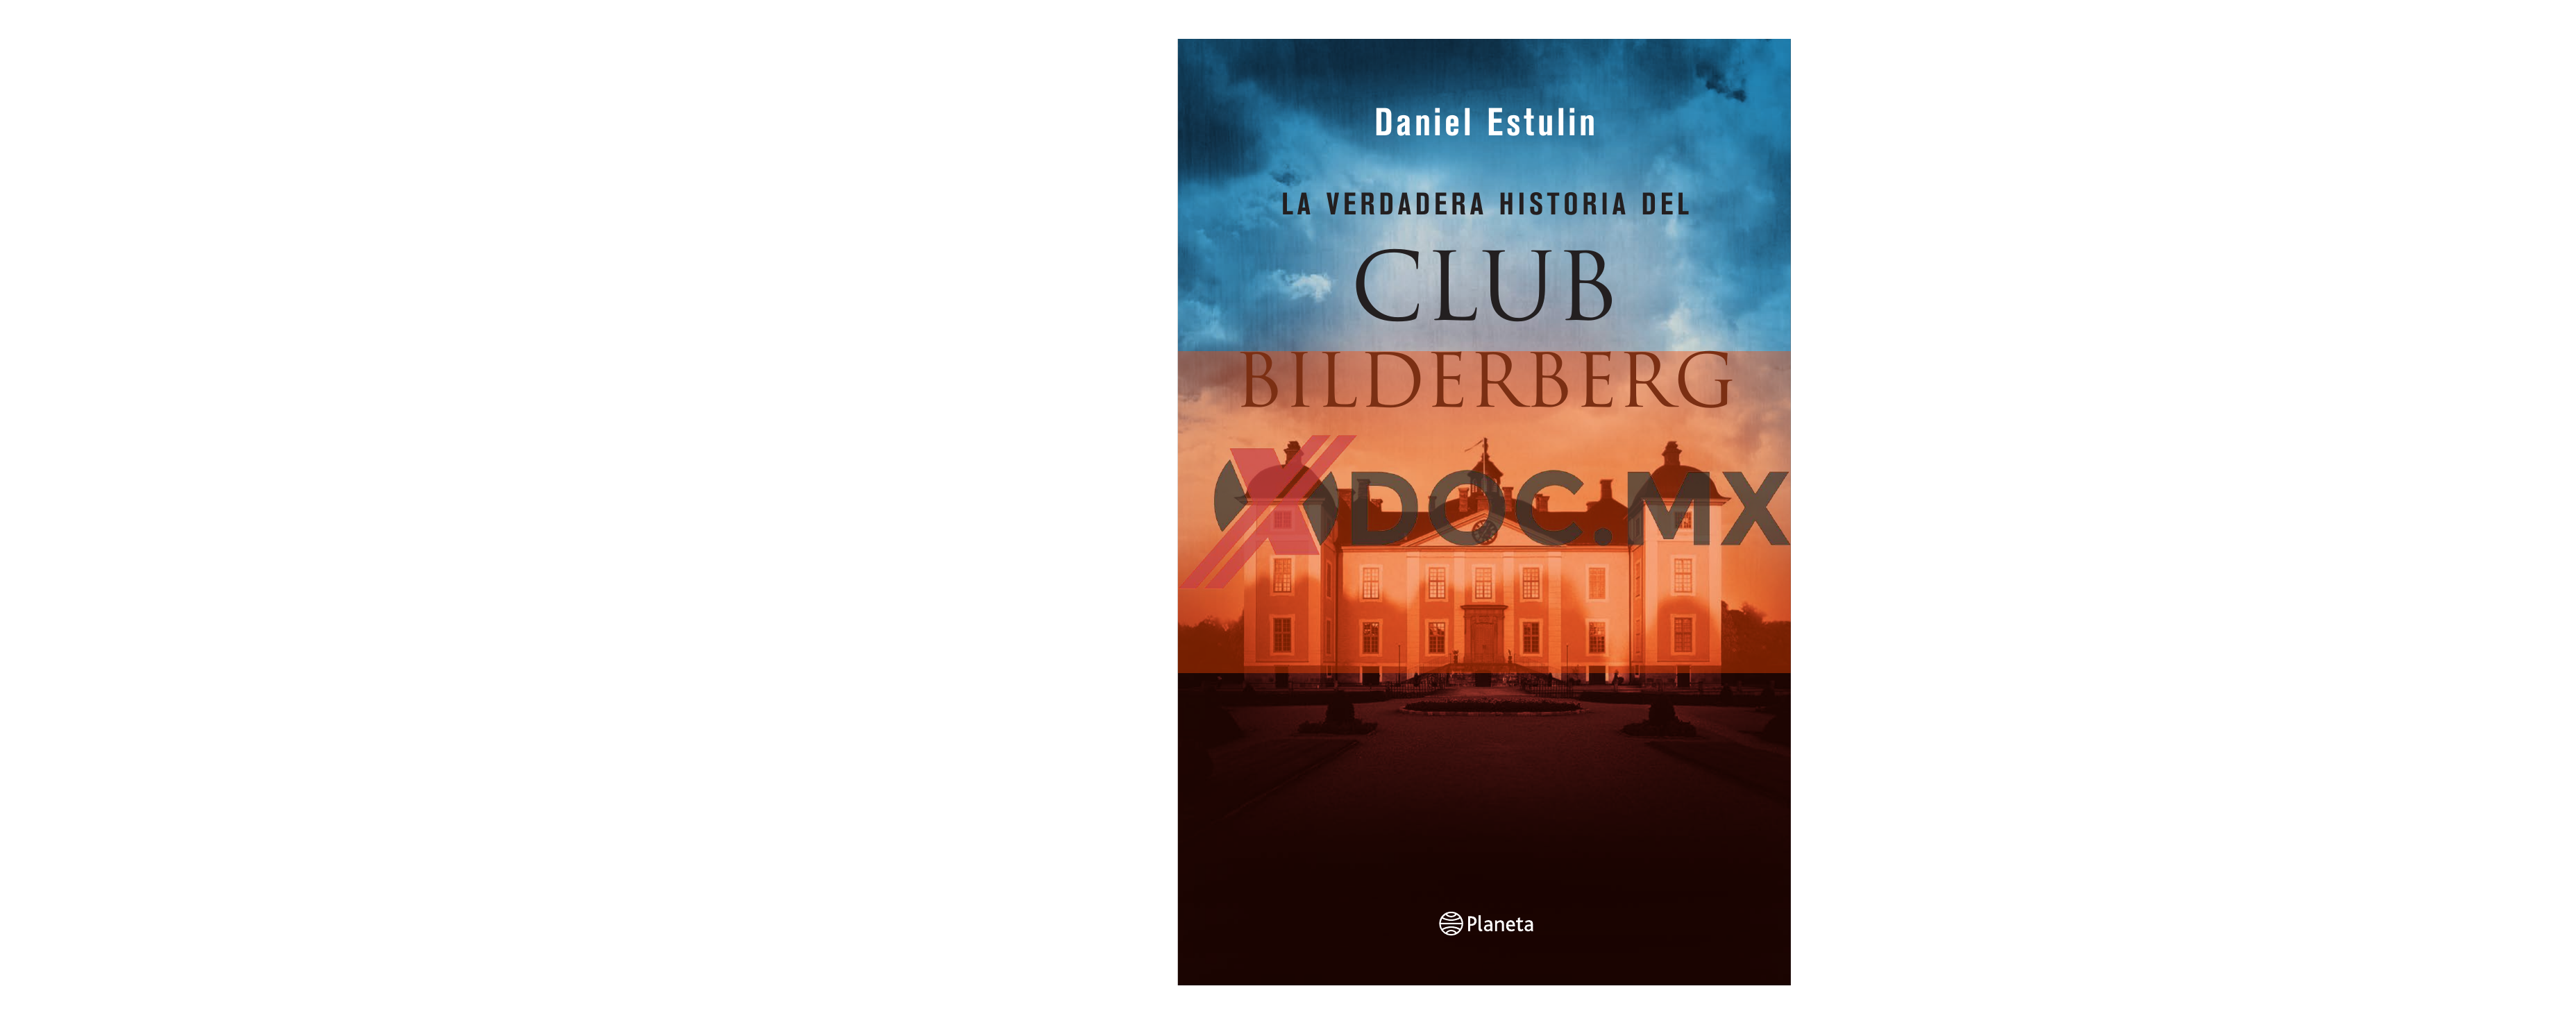 La verdadera Histora del Club Bilderberg ( Daniel Estulin )